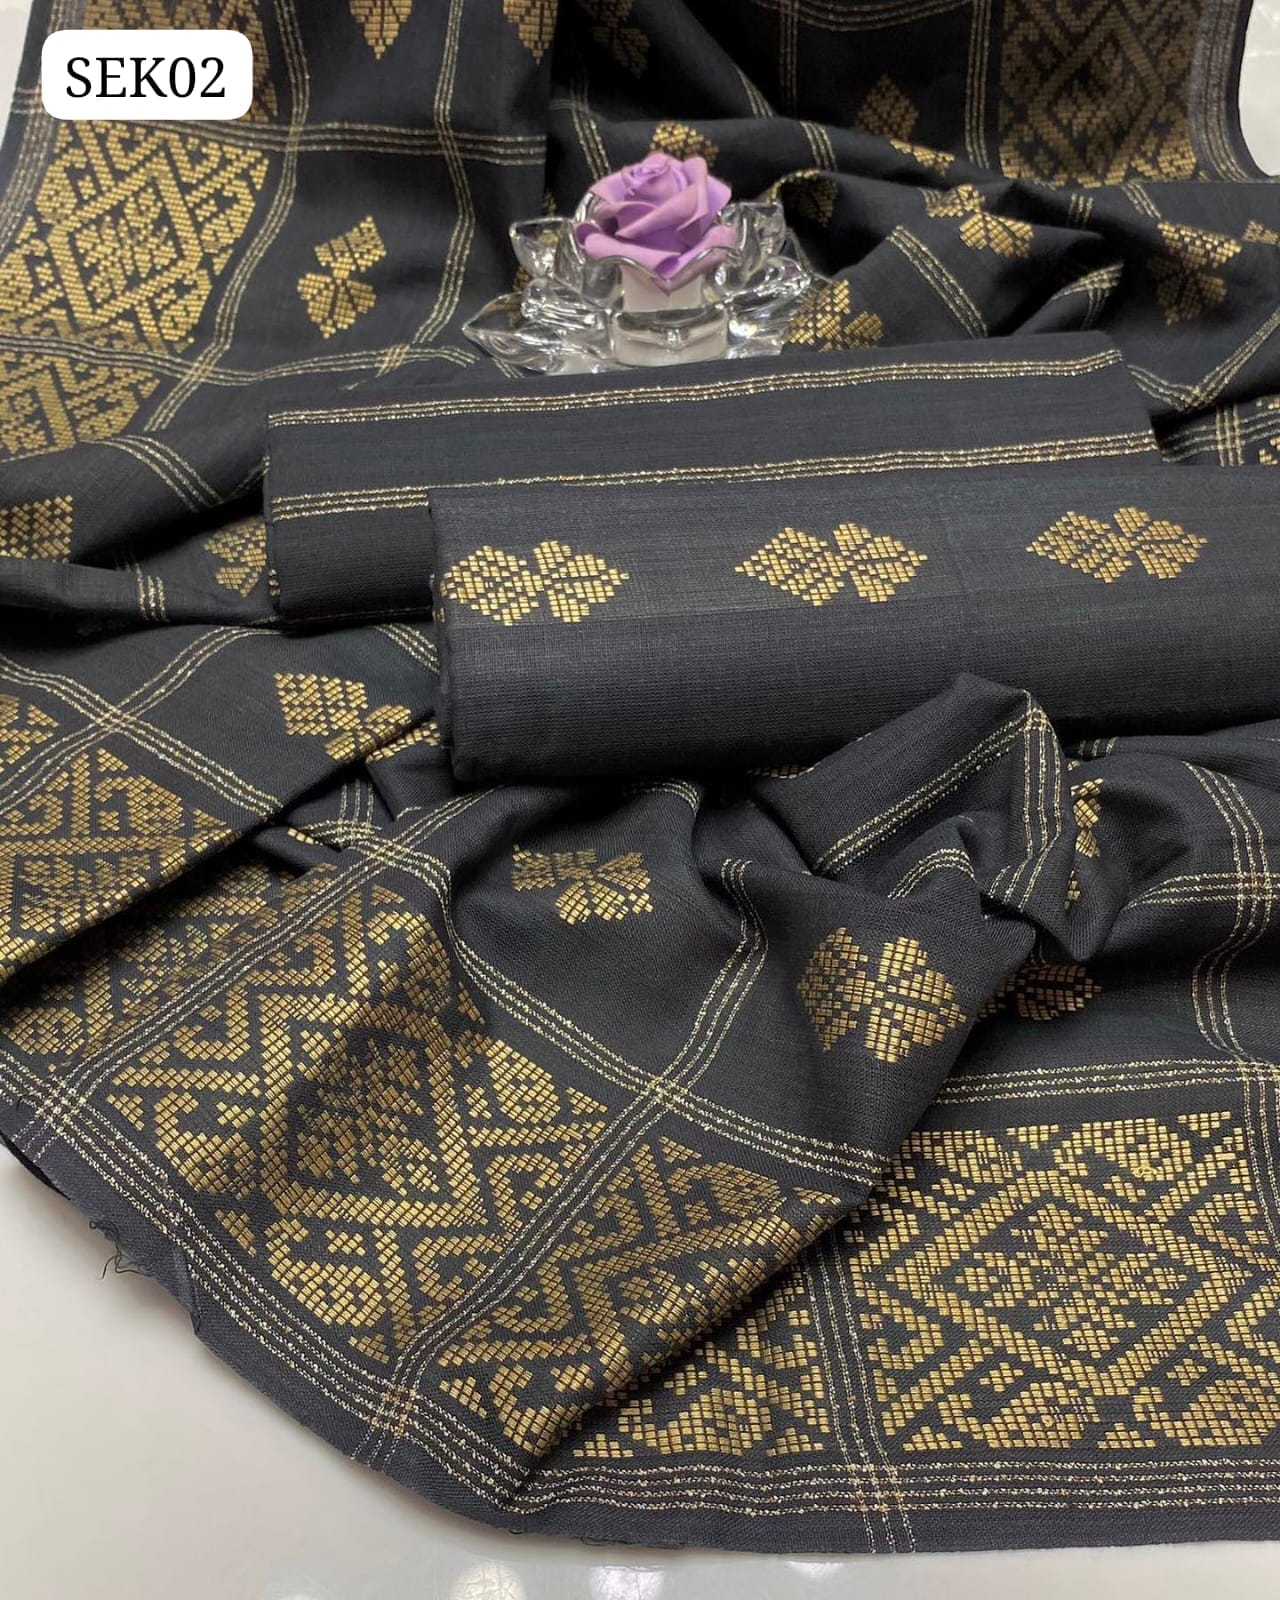 Khaadi Acrylic Fabric Jacquard Booti Work Shirt With Jacquard Border Acrylic Khaadi Dupatta And Acrylic Khaadi Trouser 3Pc Dress